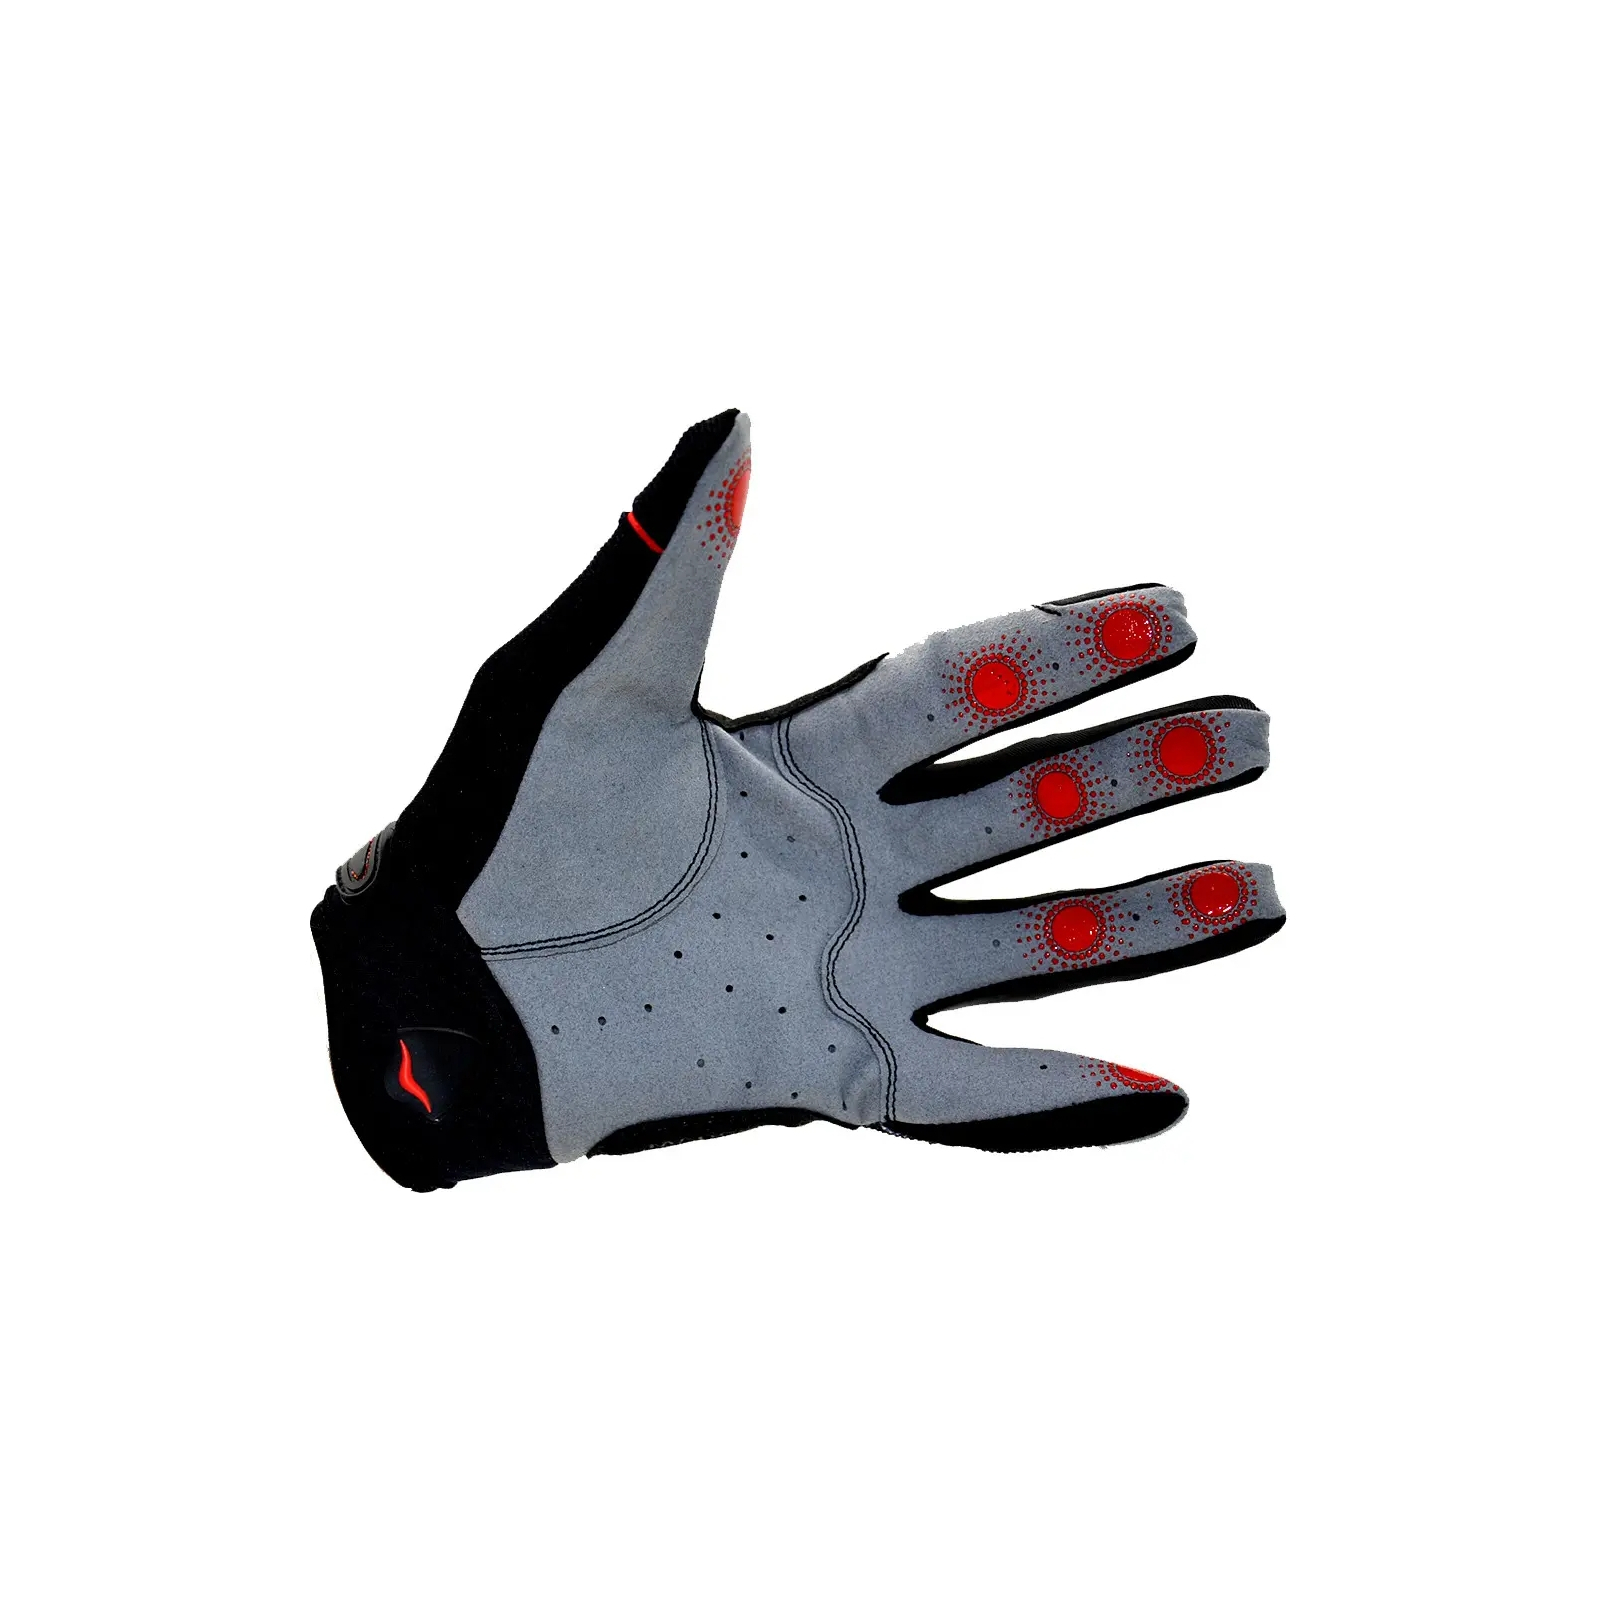 Перчатки для фитнеса MadMax MXG-103 X Gloves Black/Grey L (MXG-103-BLK_L) изображение 9